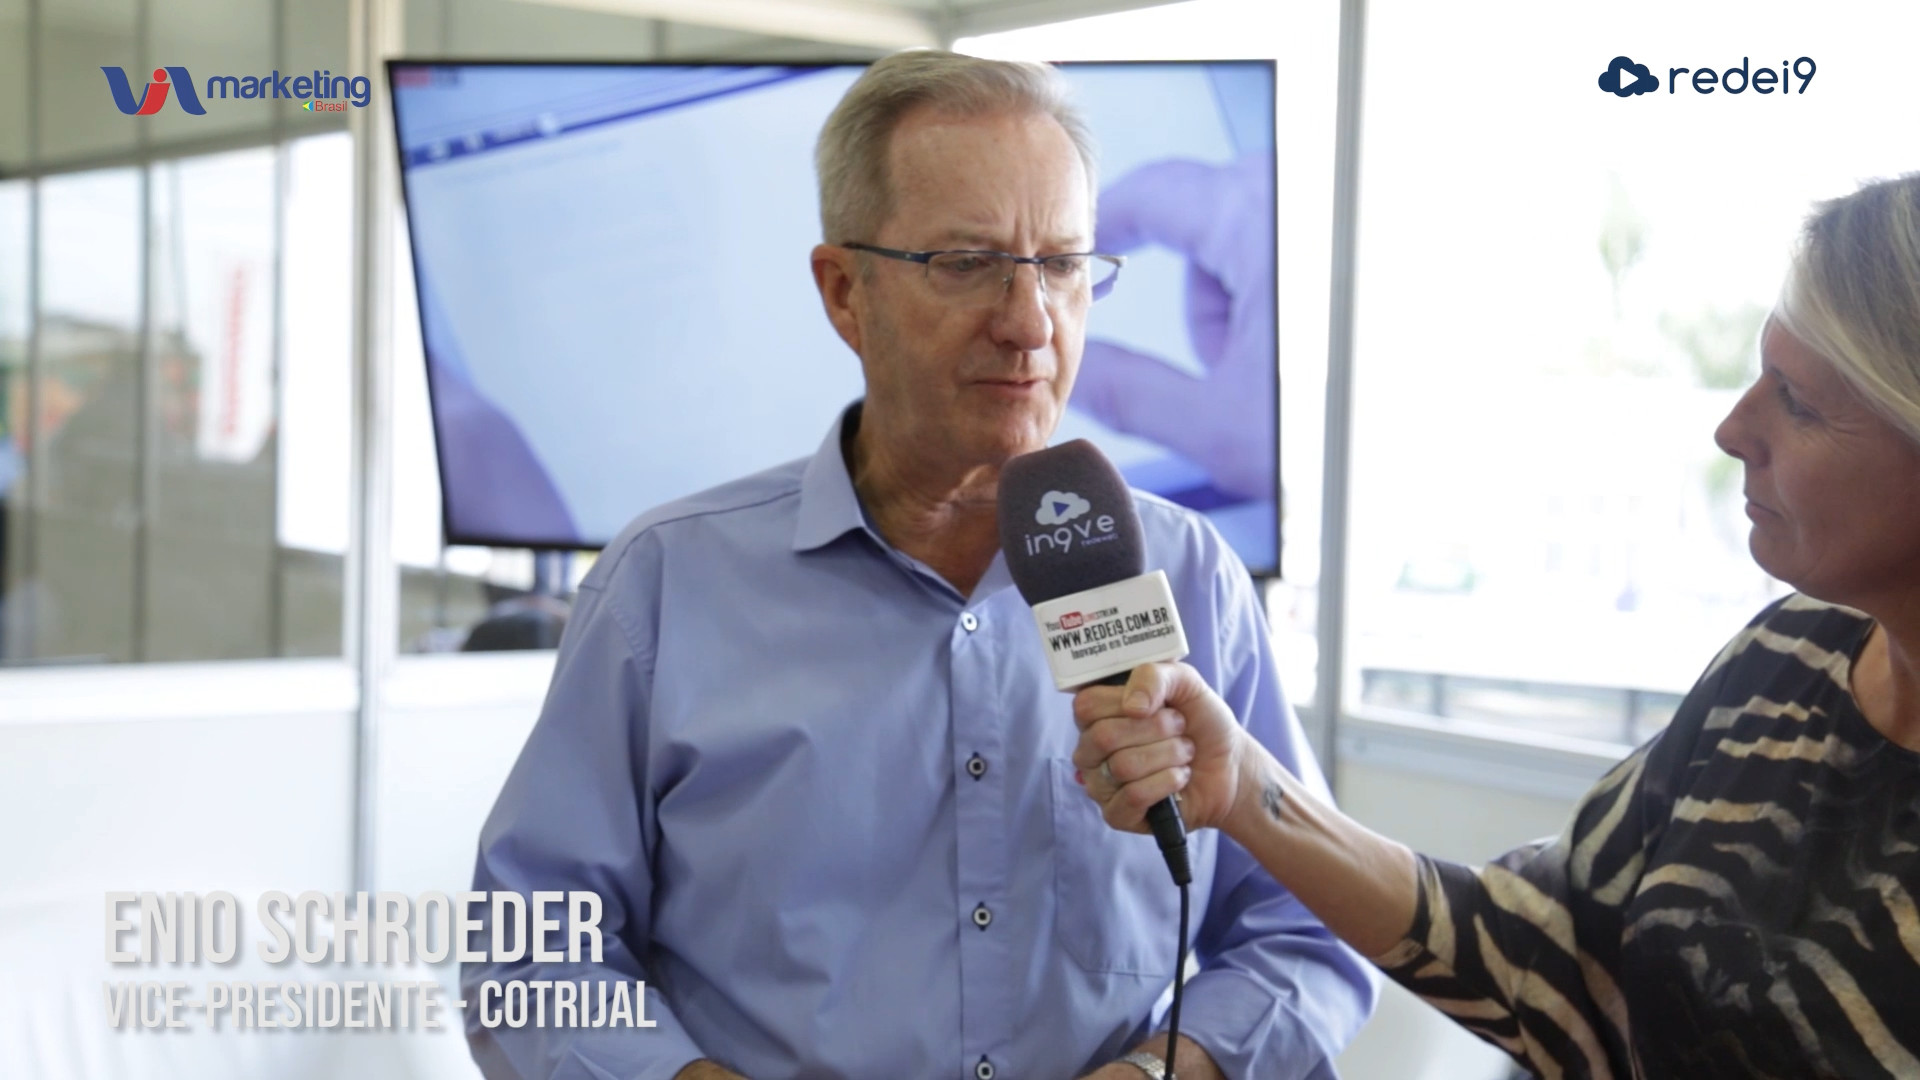 Enio Schoeder – Vice-presidente da Cotrijal na Expodireto 2020